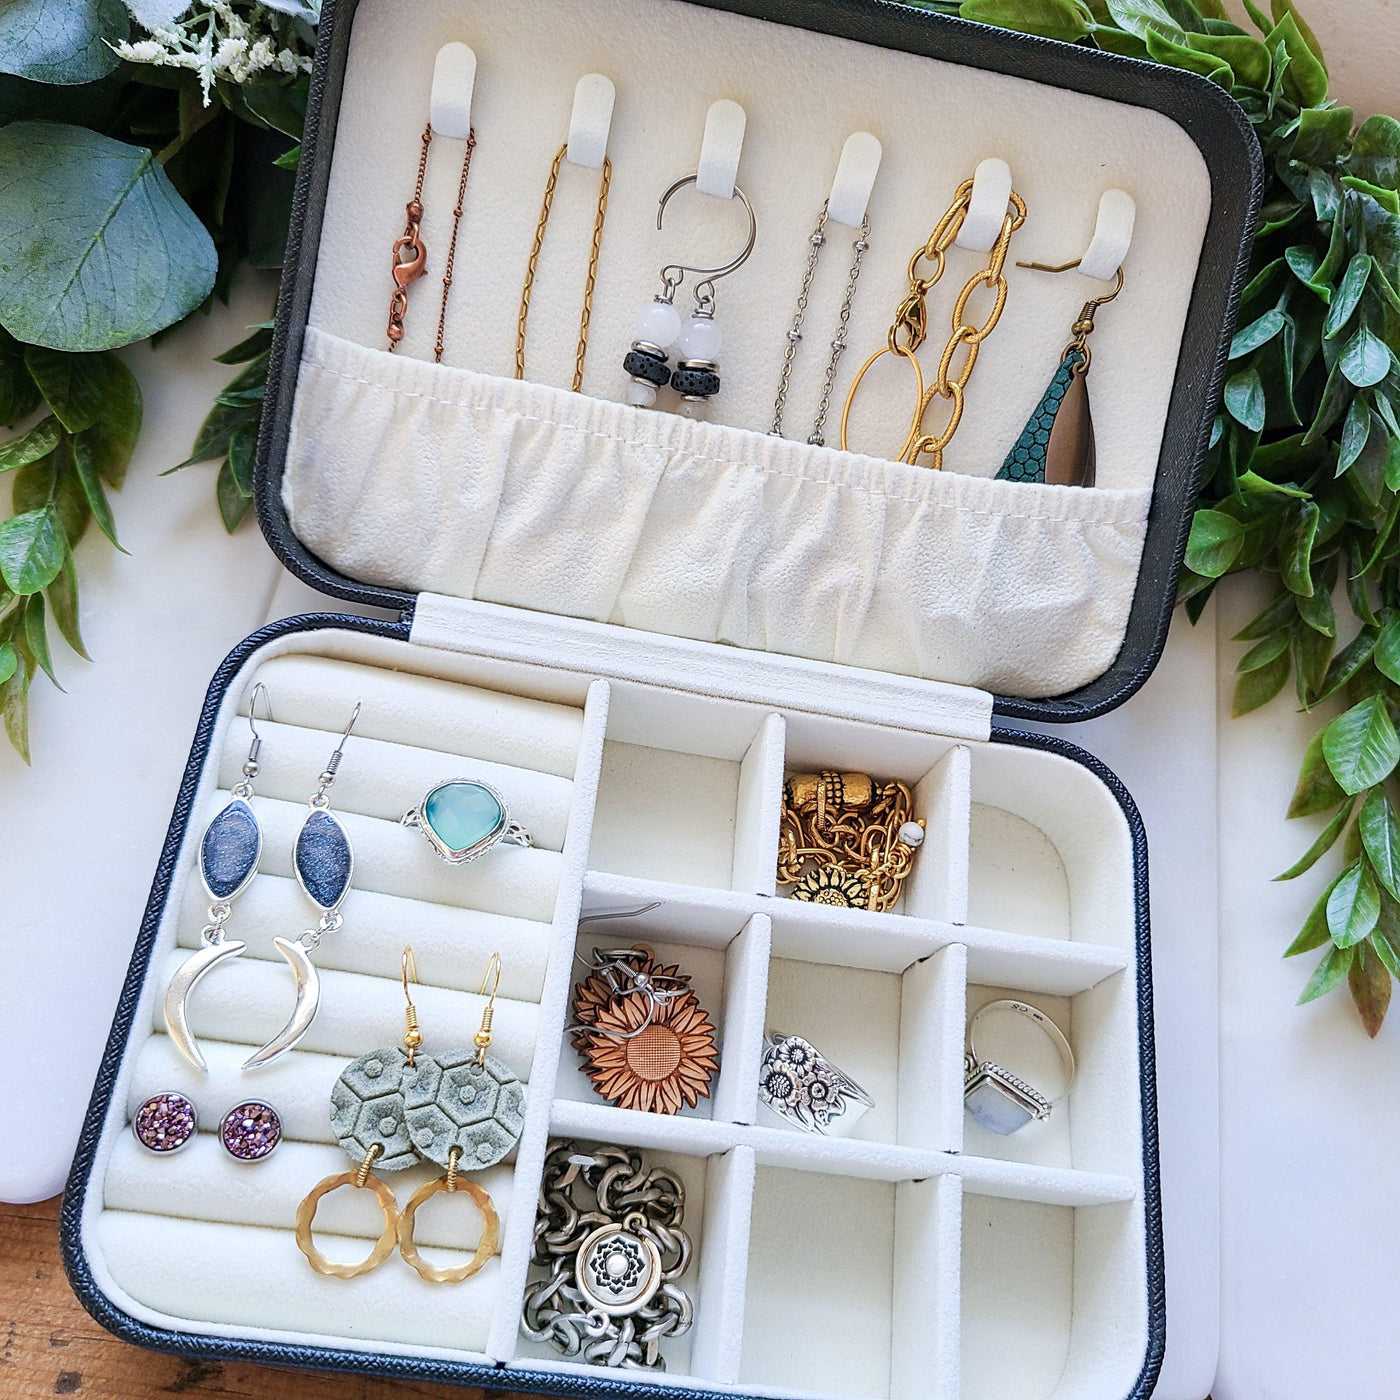 Travel Jewelry Organizer | Cases - Little Blue Bus Jewelry